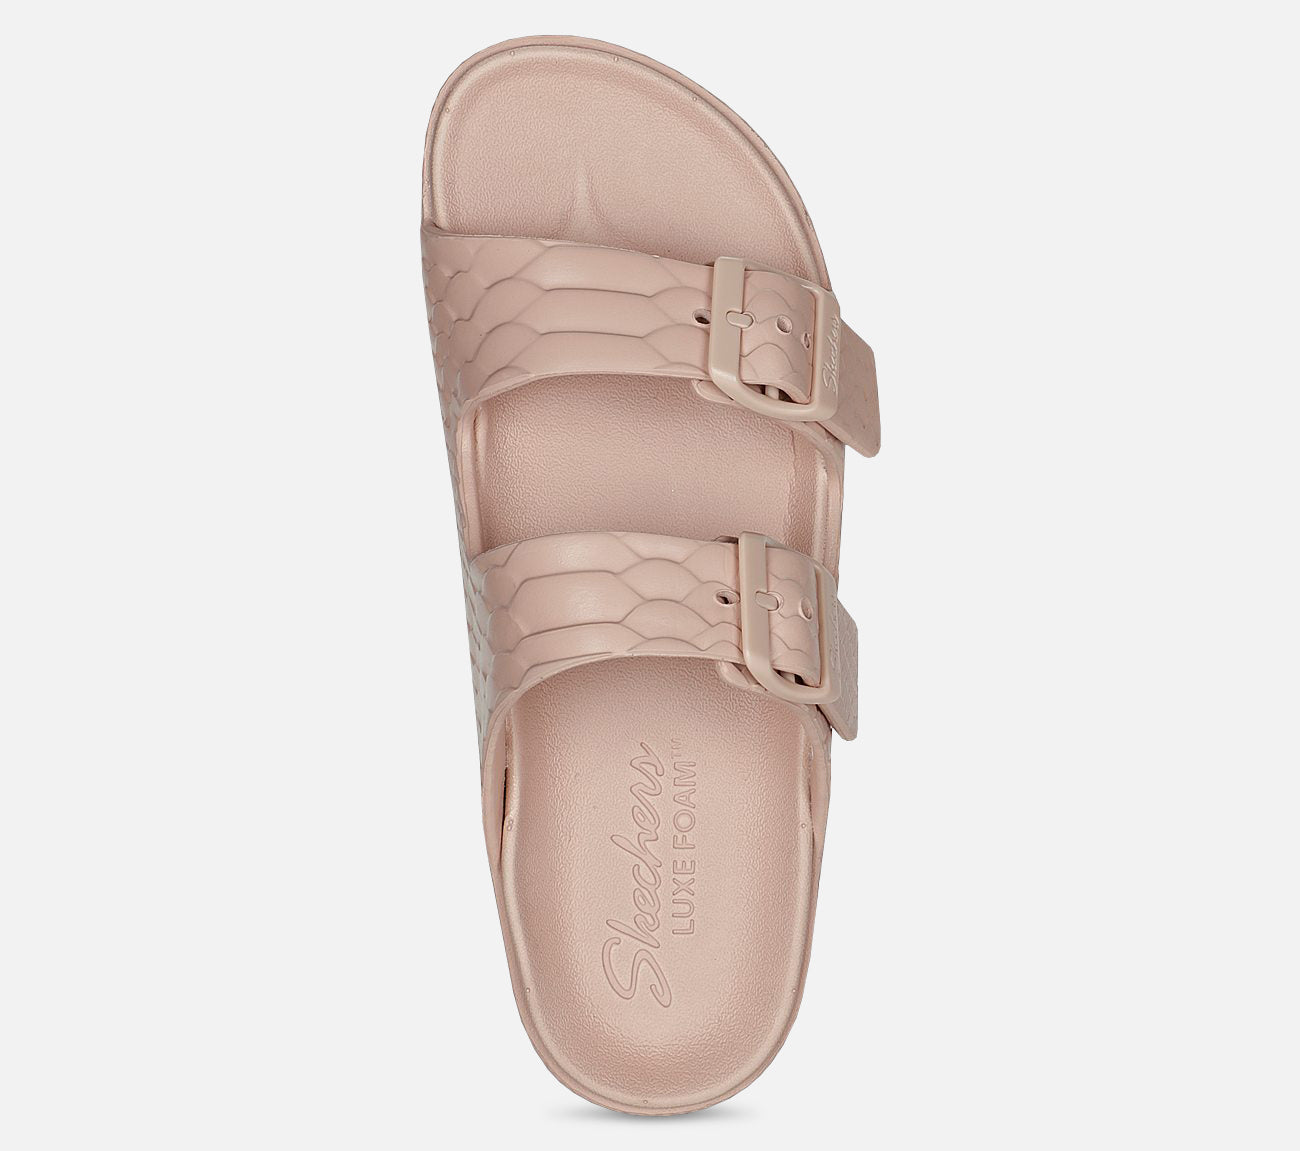 Cali Breeze 2.0 - Royal Texture Sandal Skechers